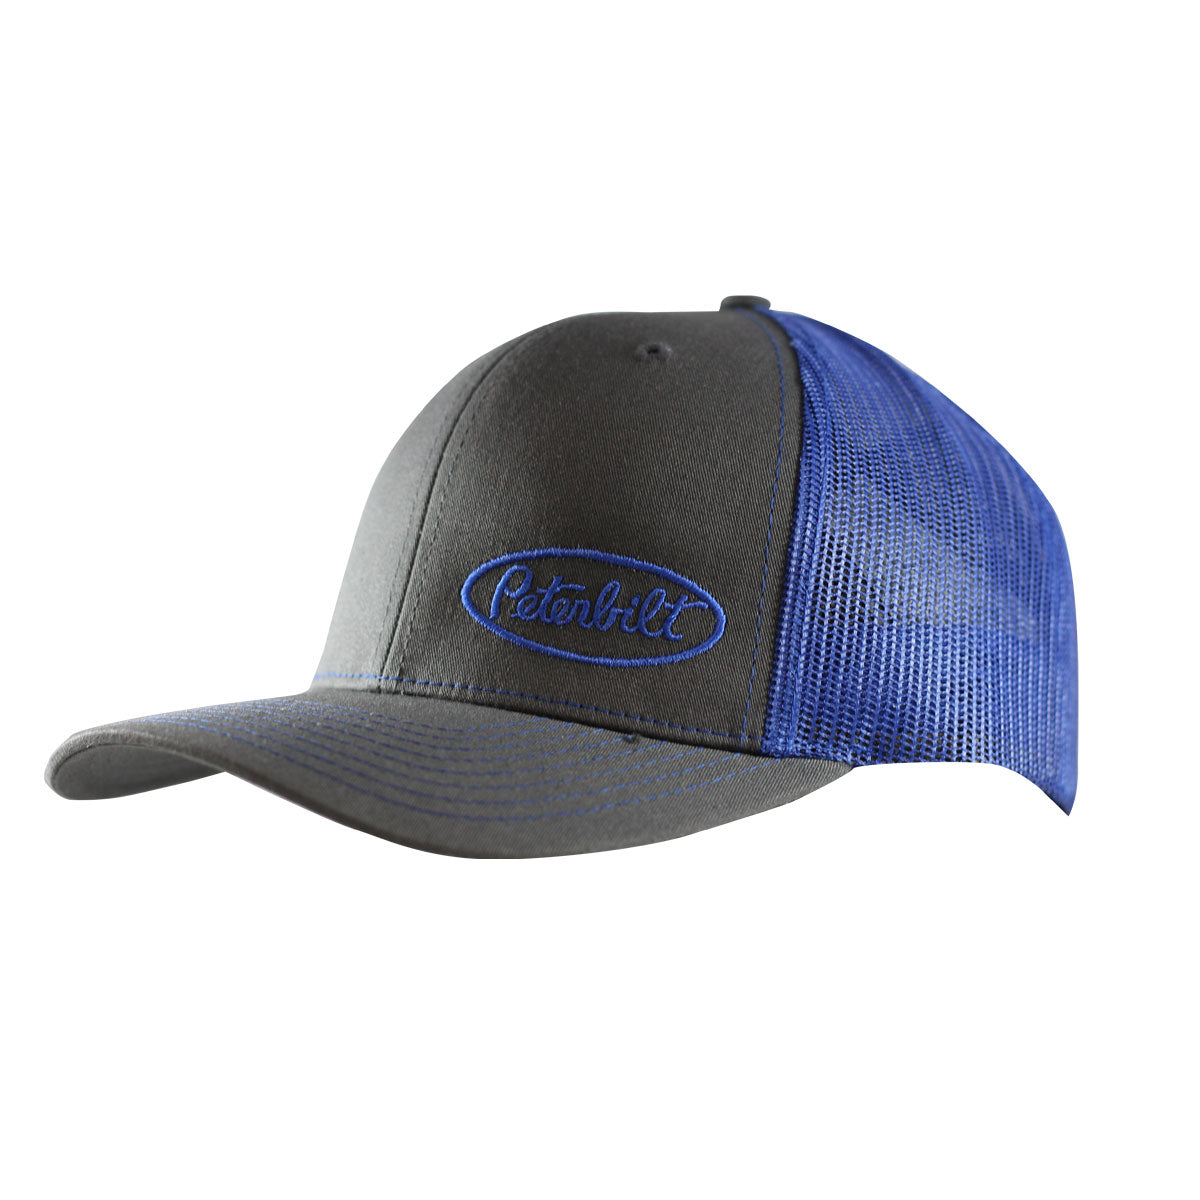 Peterbilt Classic Gray and Royal Blue Logo with Mesh Trucker Cap